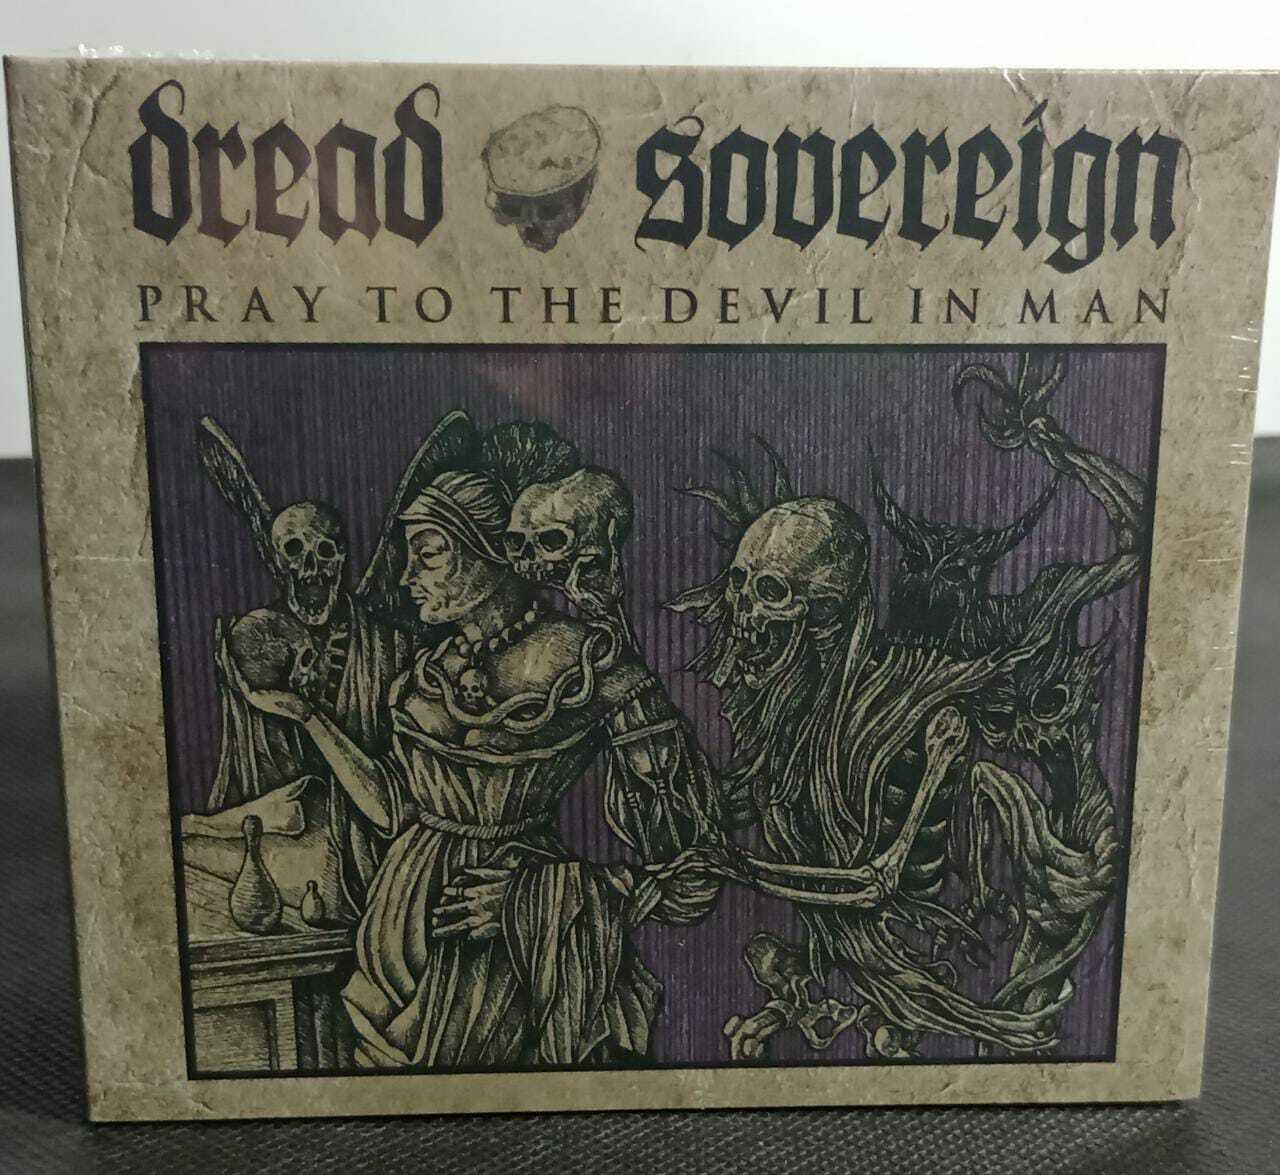 CD - Dread Sovereign - Pray To The Devil In Man (Germany/Lacrado)